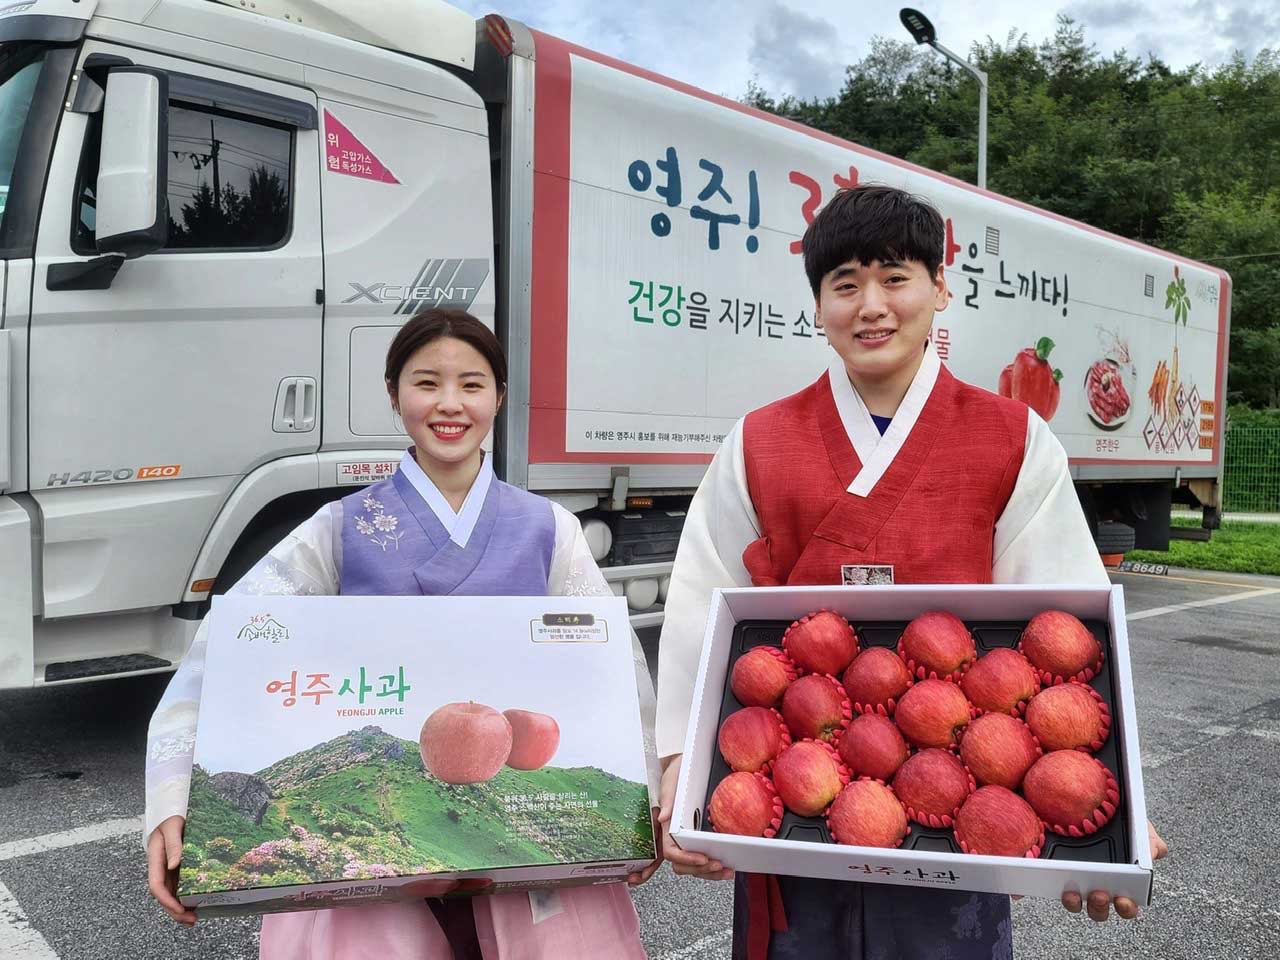 SK머티리얼즈 직원이 영주 특산물 광고가 게재되어 있는 물류 트레일러 앞에서 영주 사과를 들고 있는 모습 2